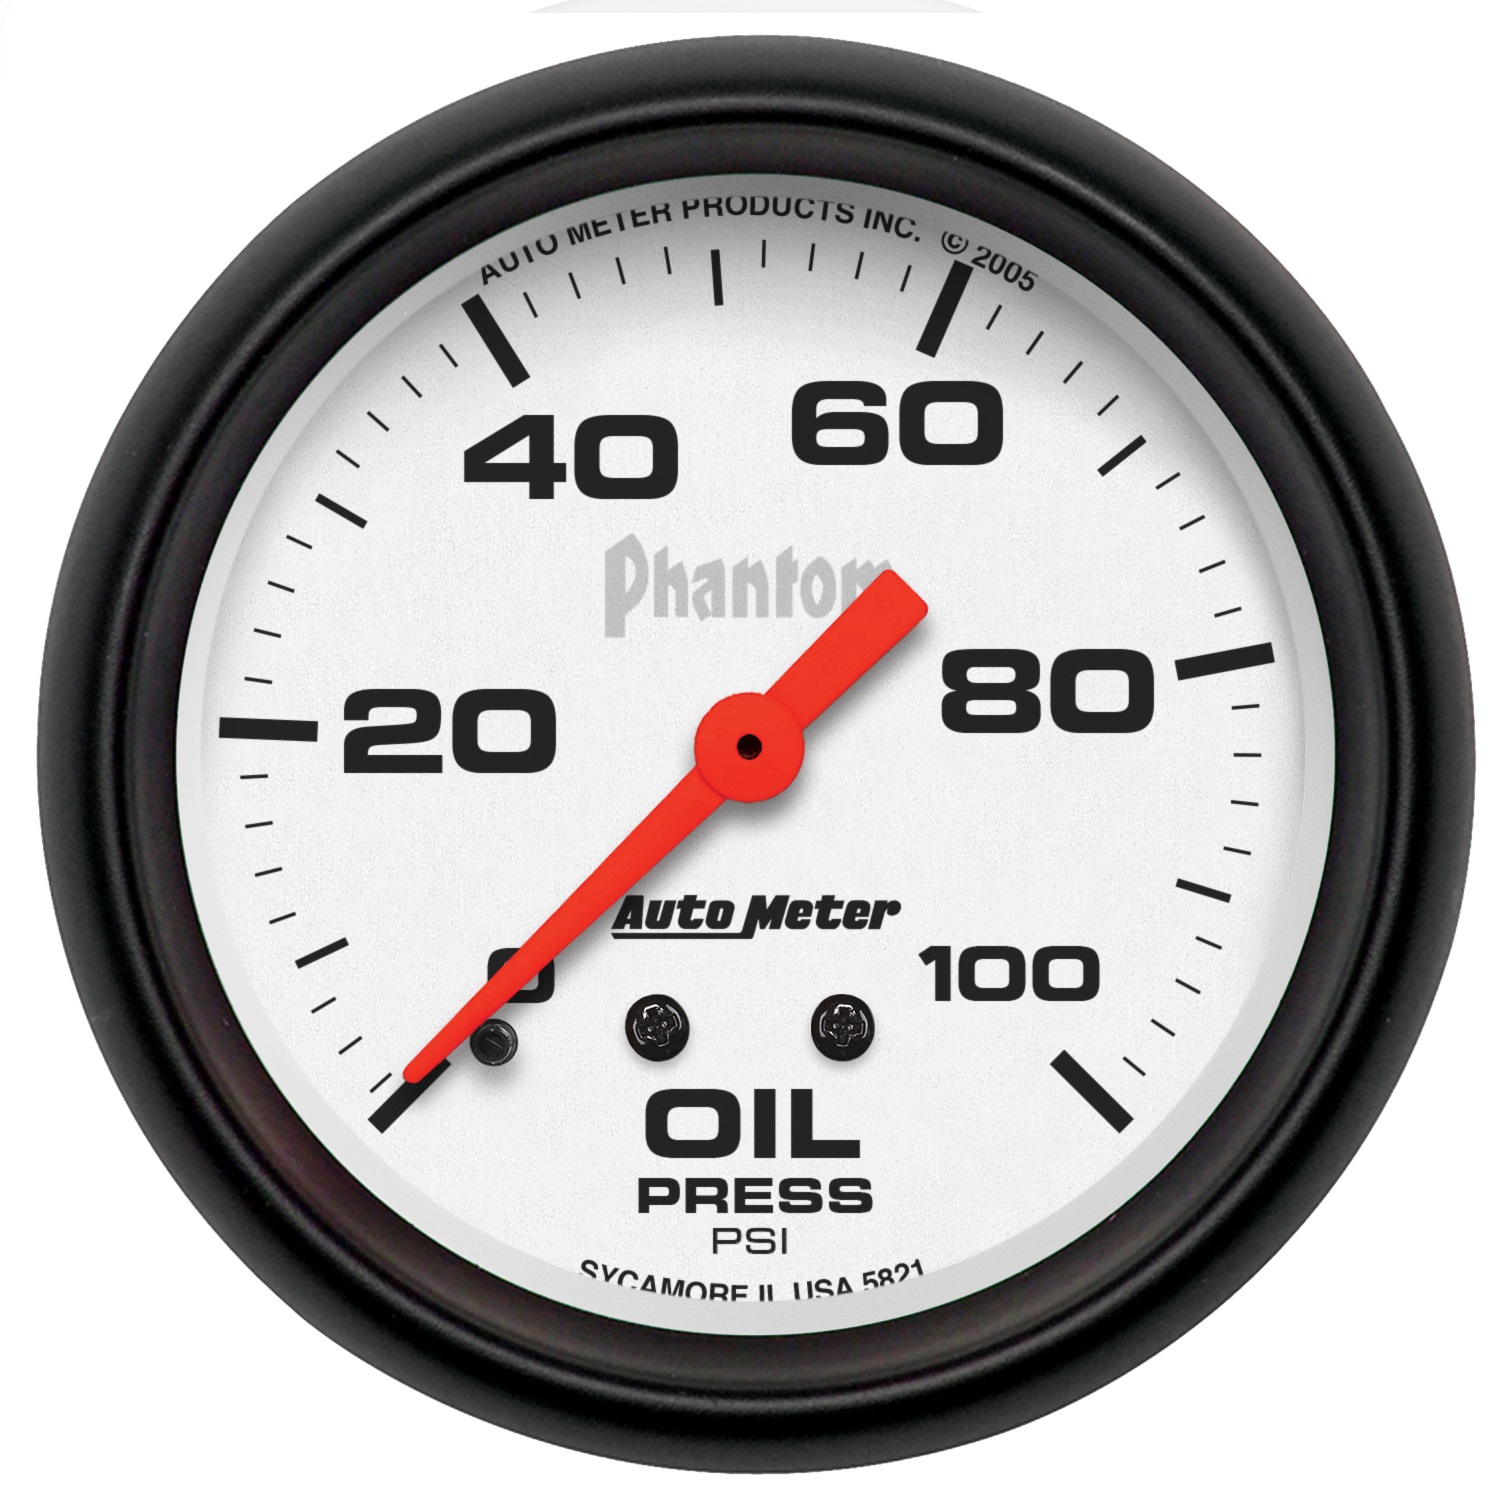 Auto Meter Auto Meter 5821 Phantom; Mechanical Oil Pressure Gauge